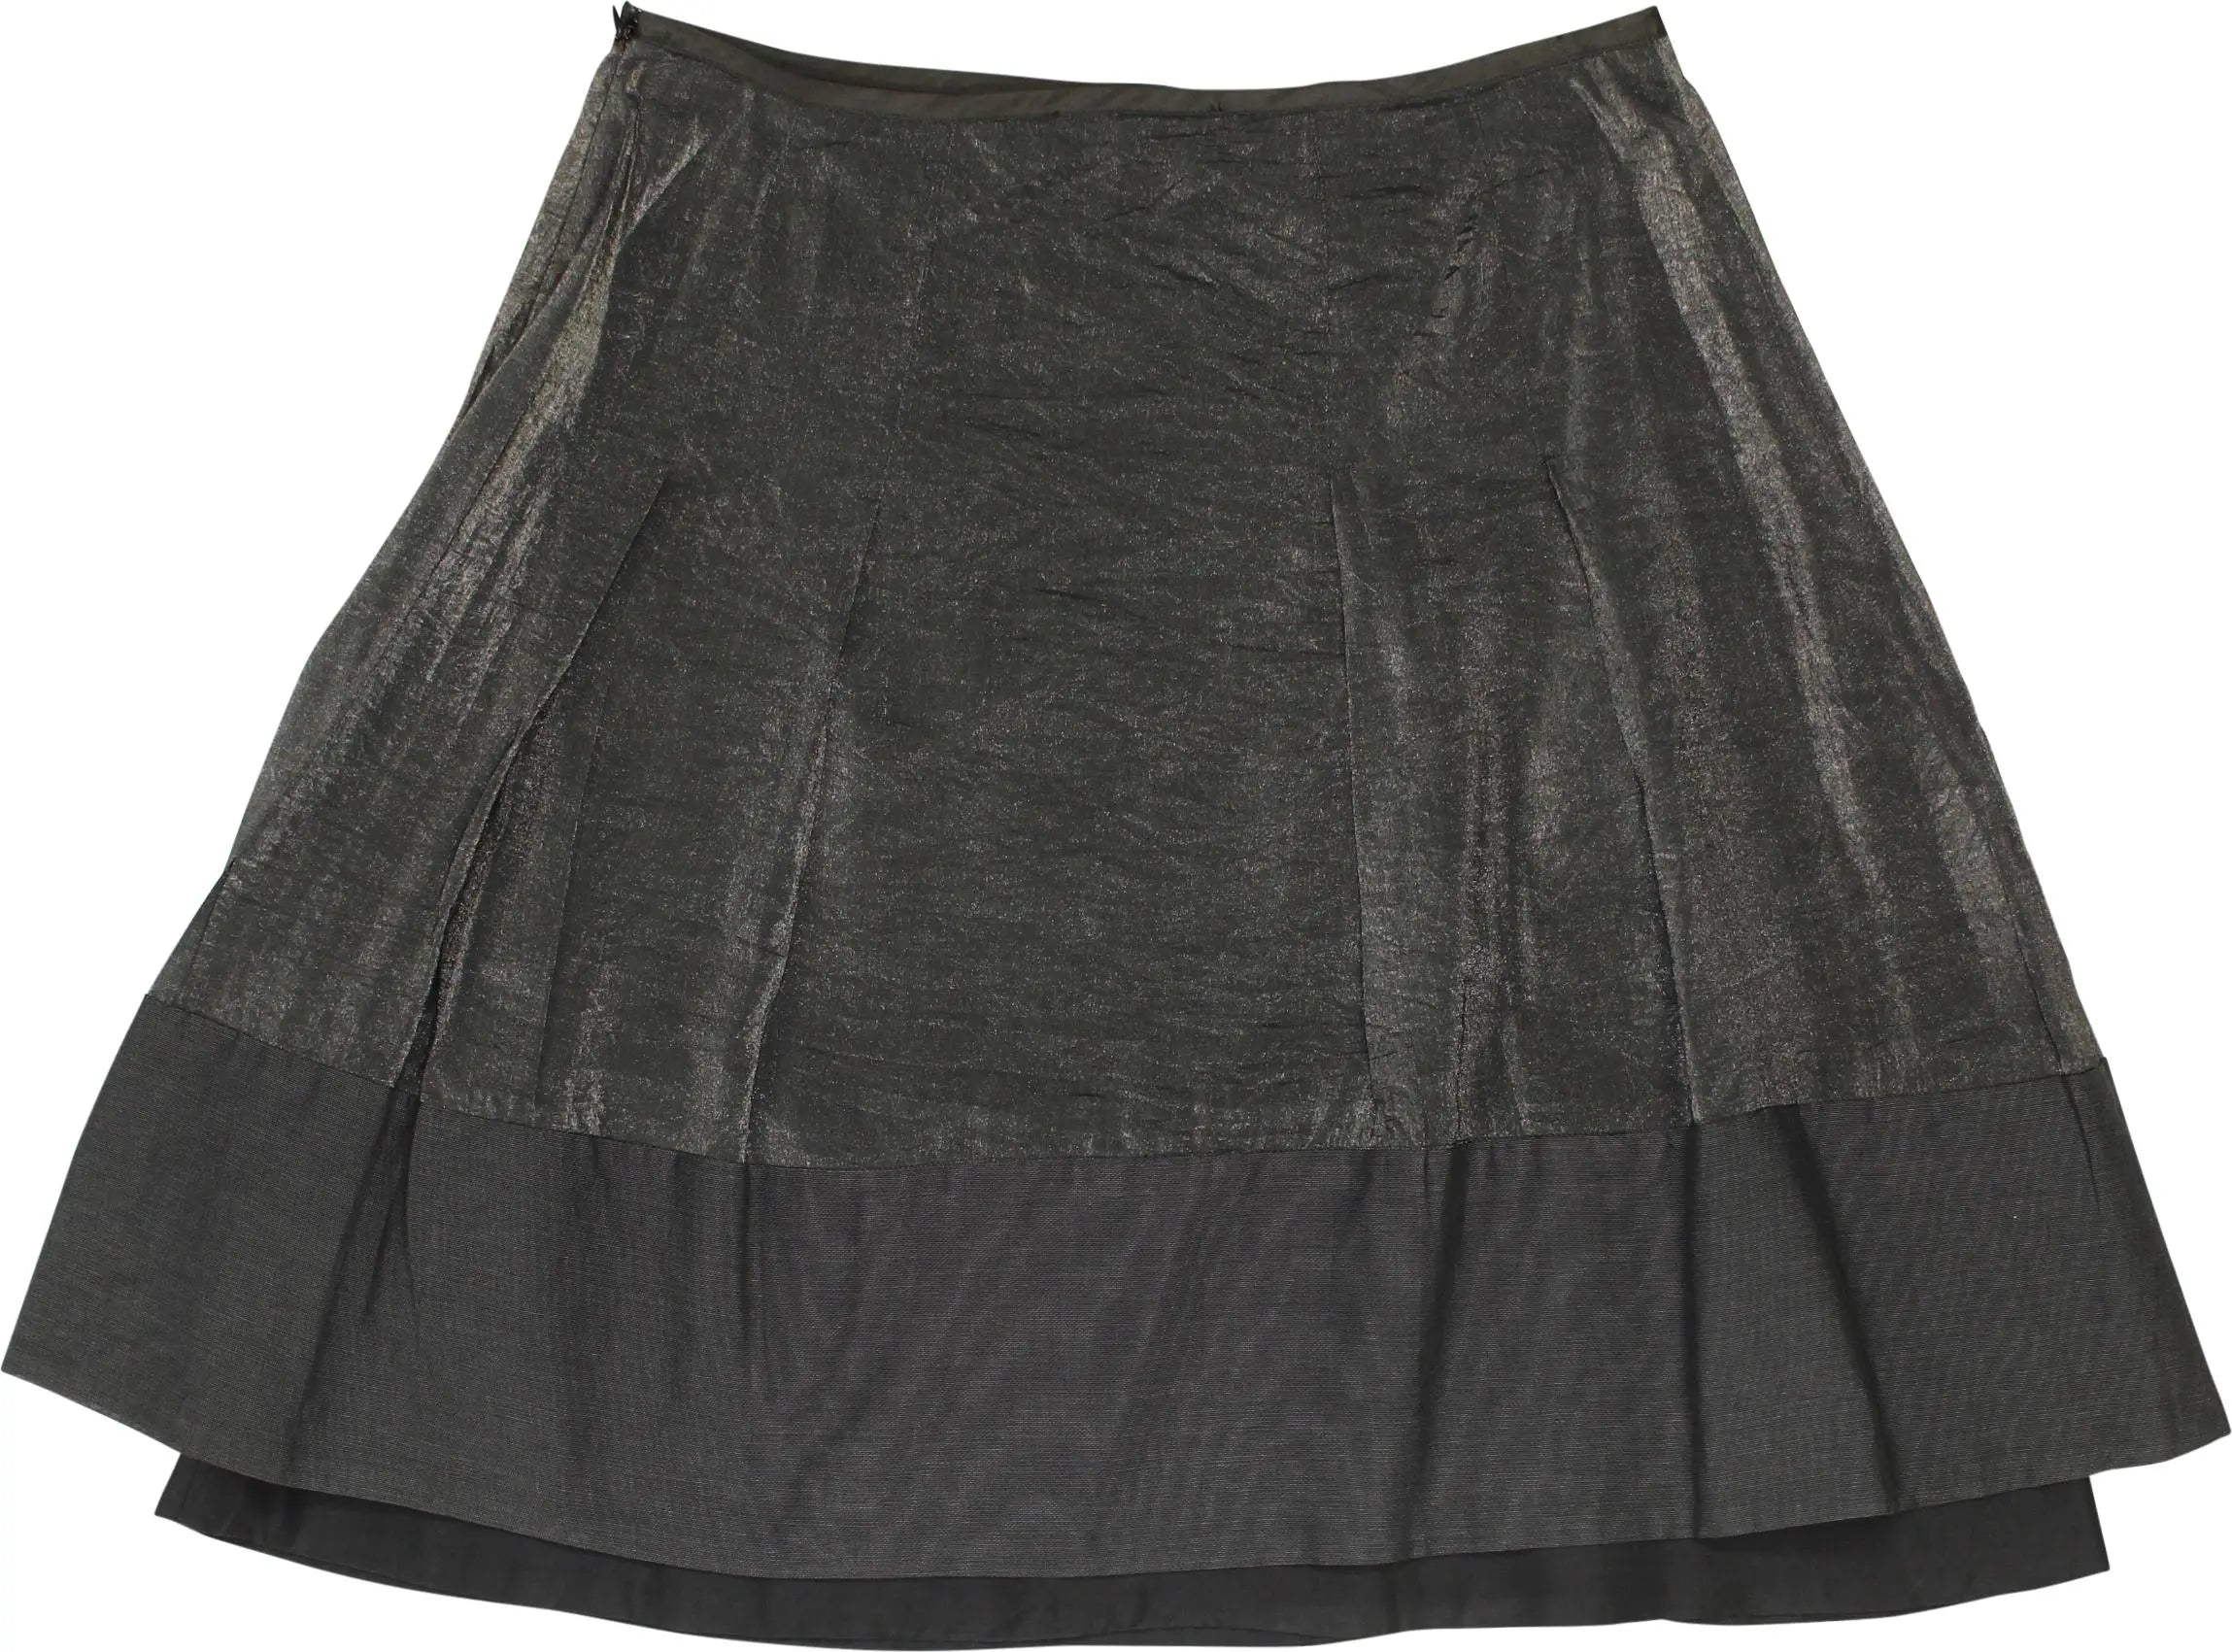 Carola van Benthum - Glitter Skirt- ThriftTale.com - Vintage and second handclothing